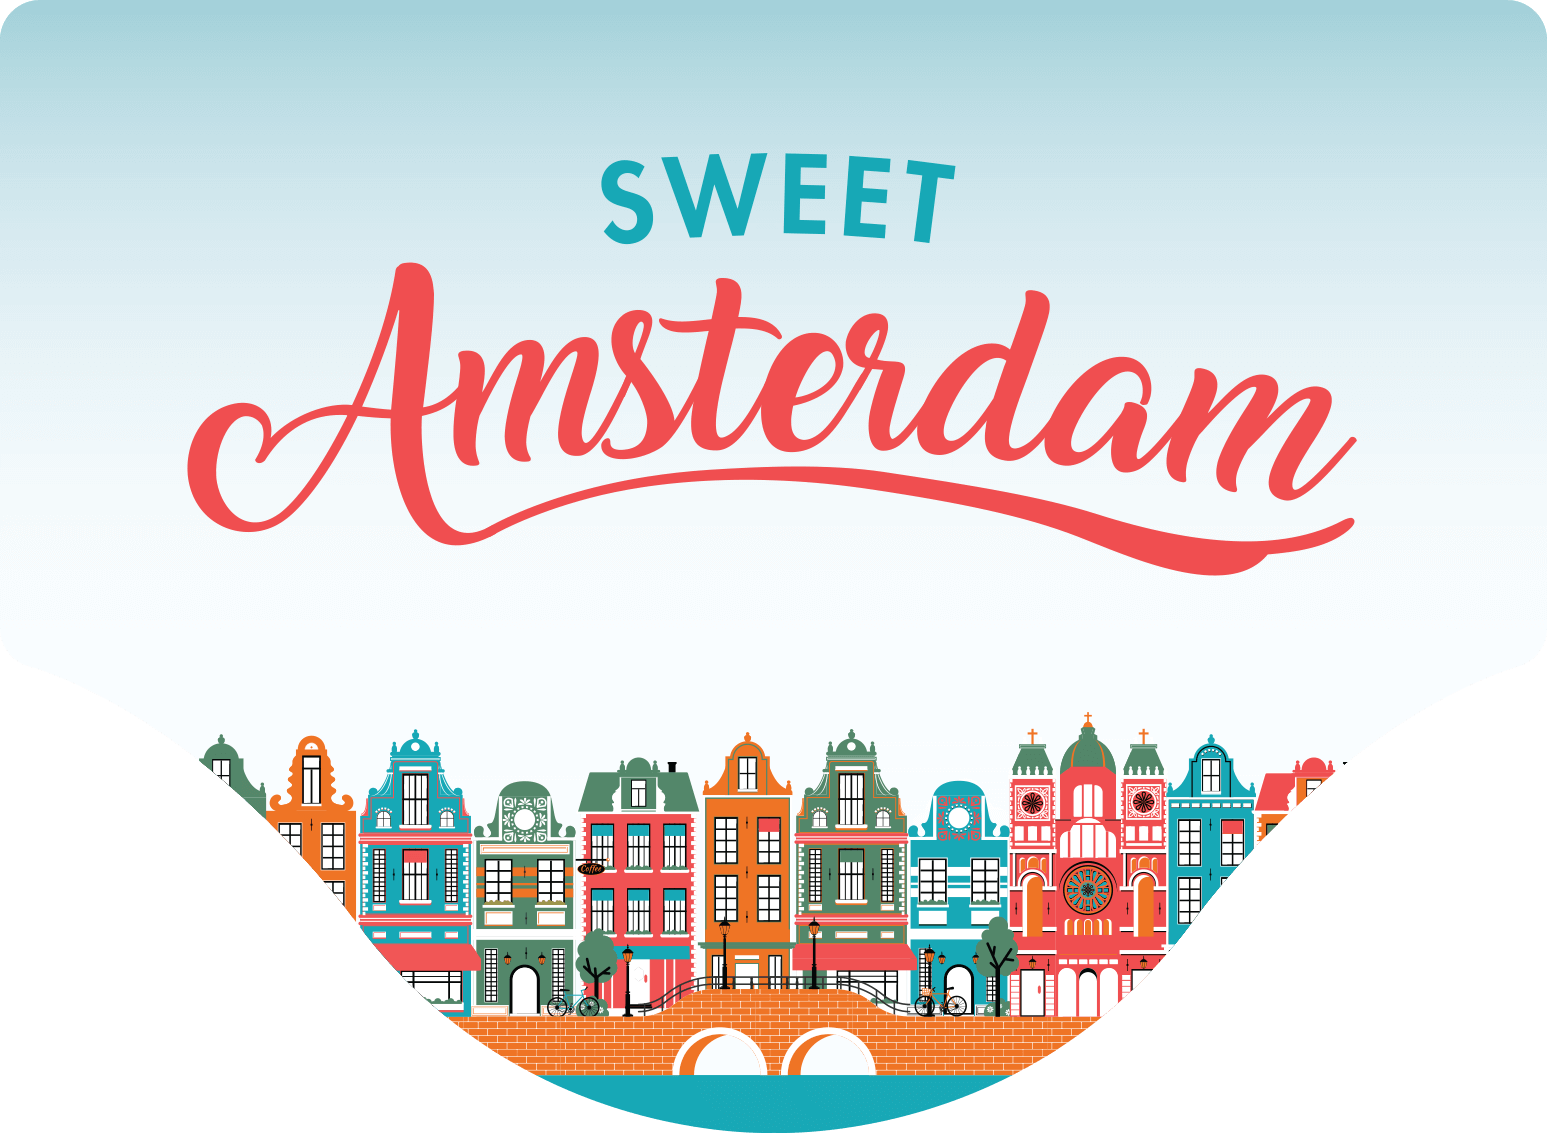 Amsterdam Logo - Sweet Amsterdam